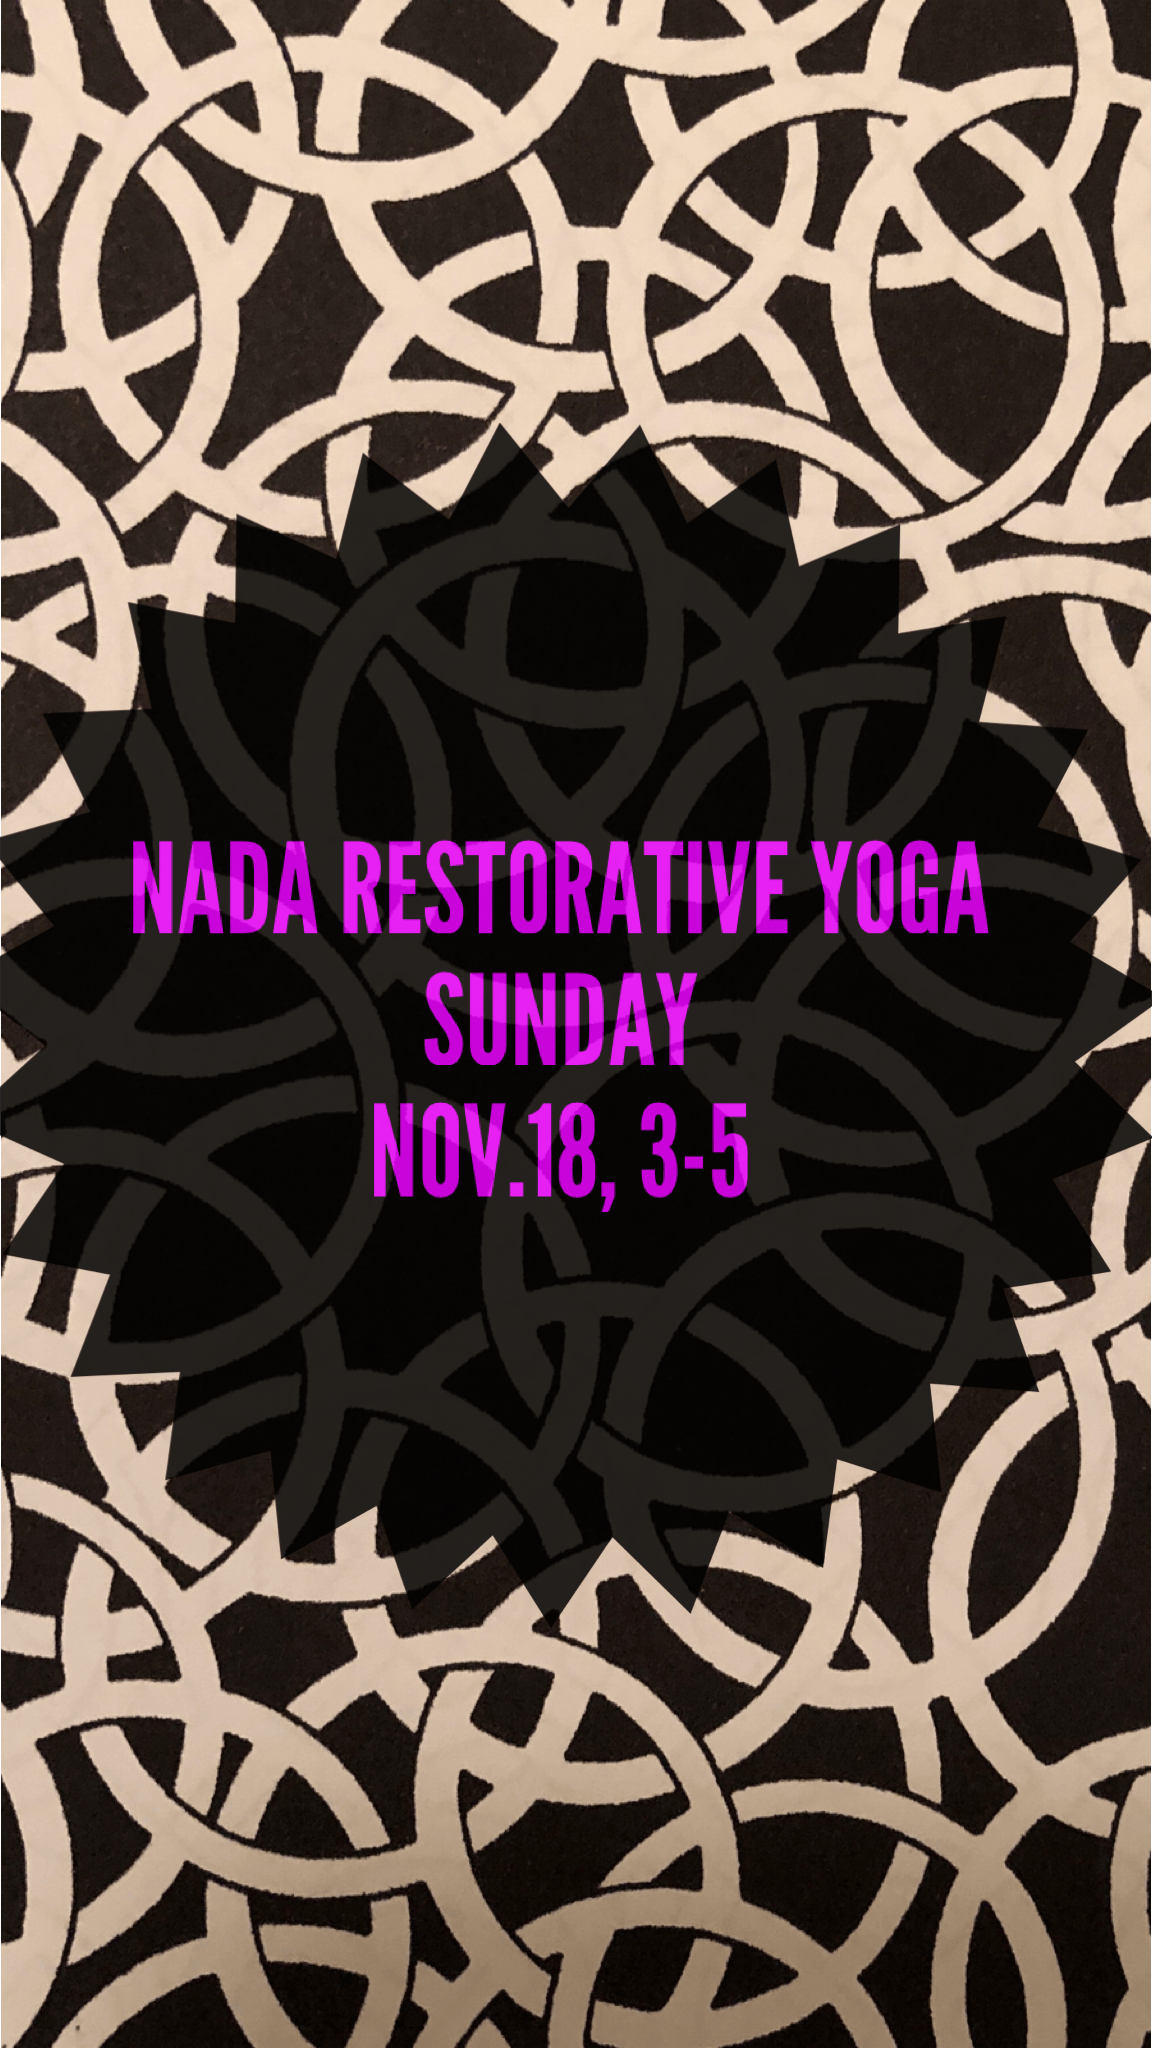 Nada Restorative Yoga